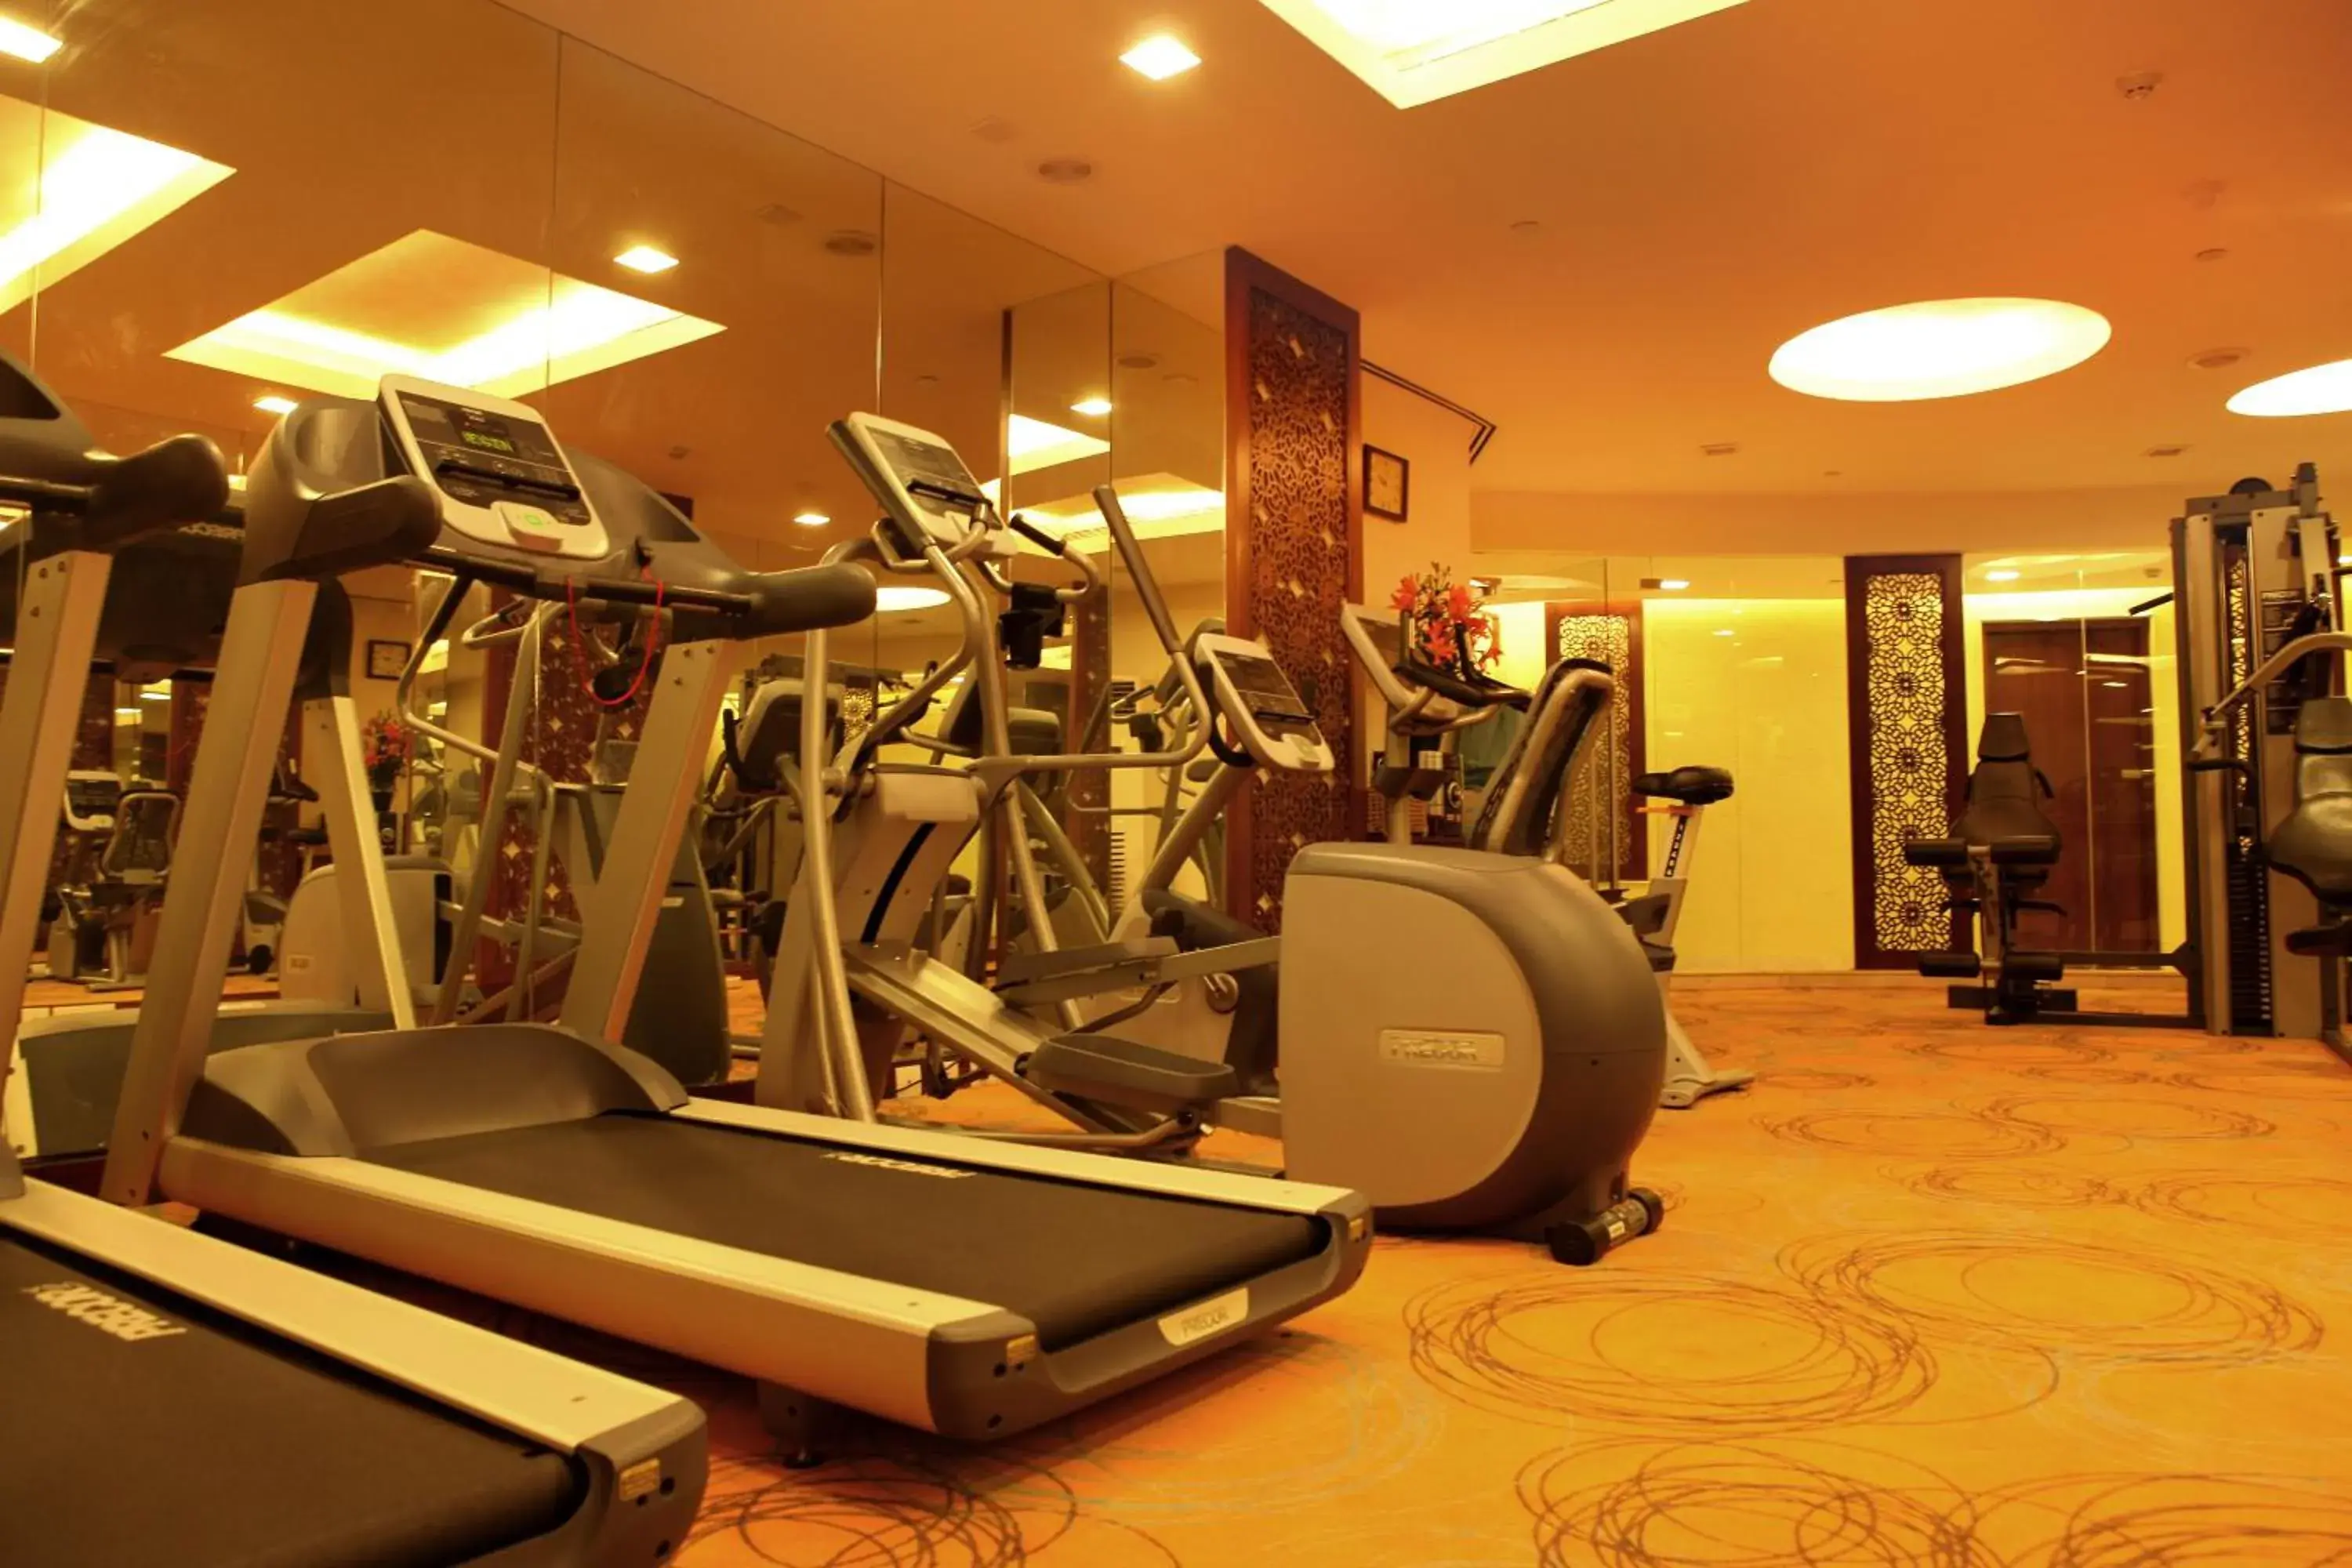 Fitness centre/facilities, Fitness Center/Facilities in The Metropolitan Hotel New Delhi